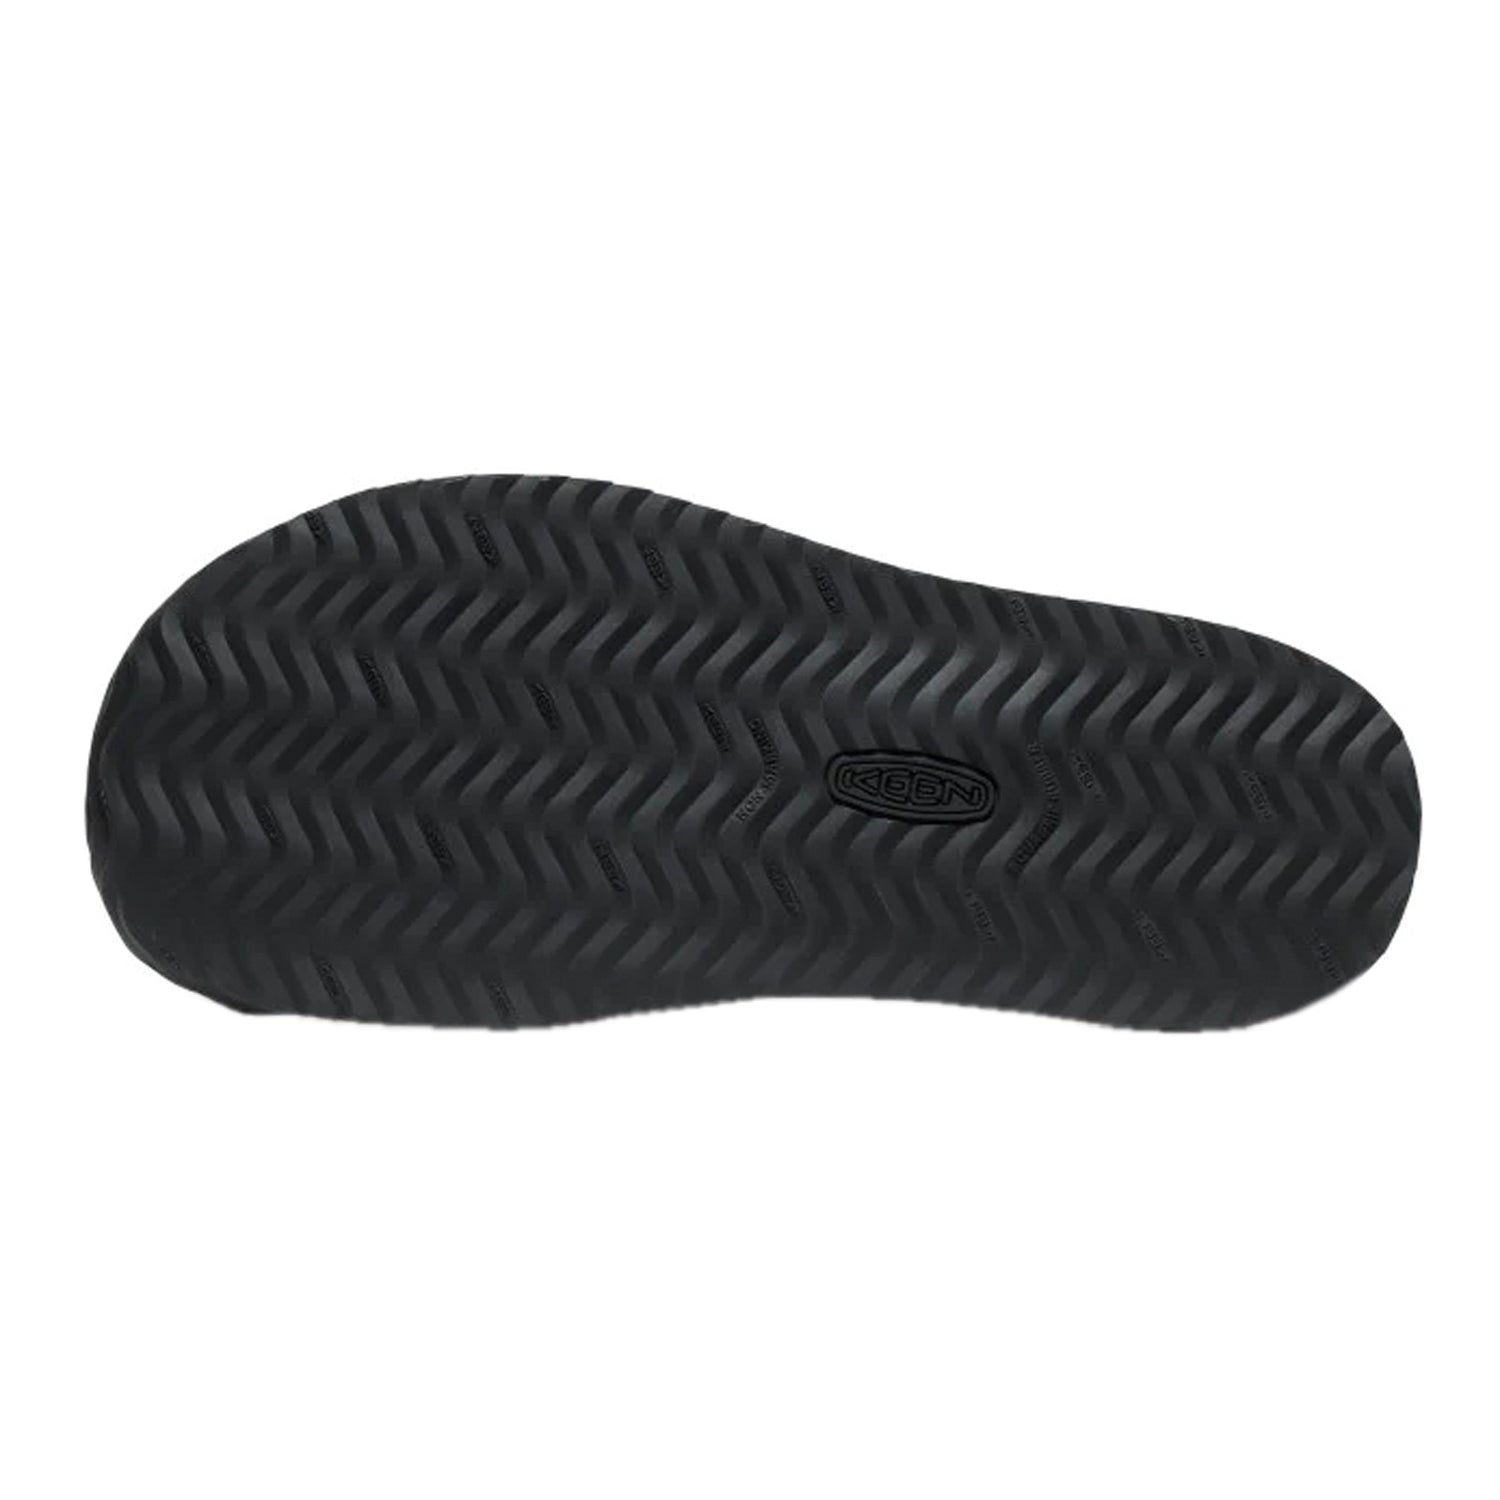 Peltz Shoes  Men's KEEN Barbados Sandal Black/Steel Grey 1029155